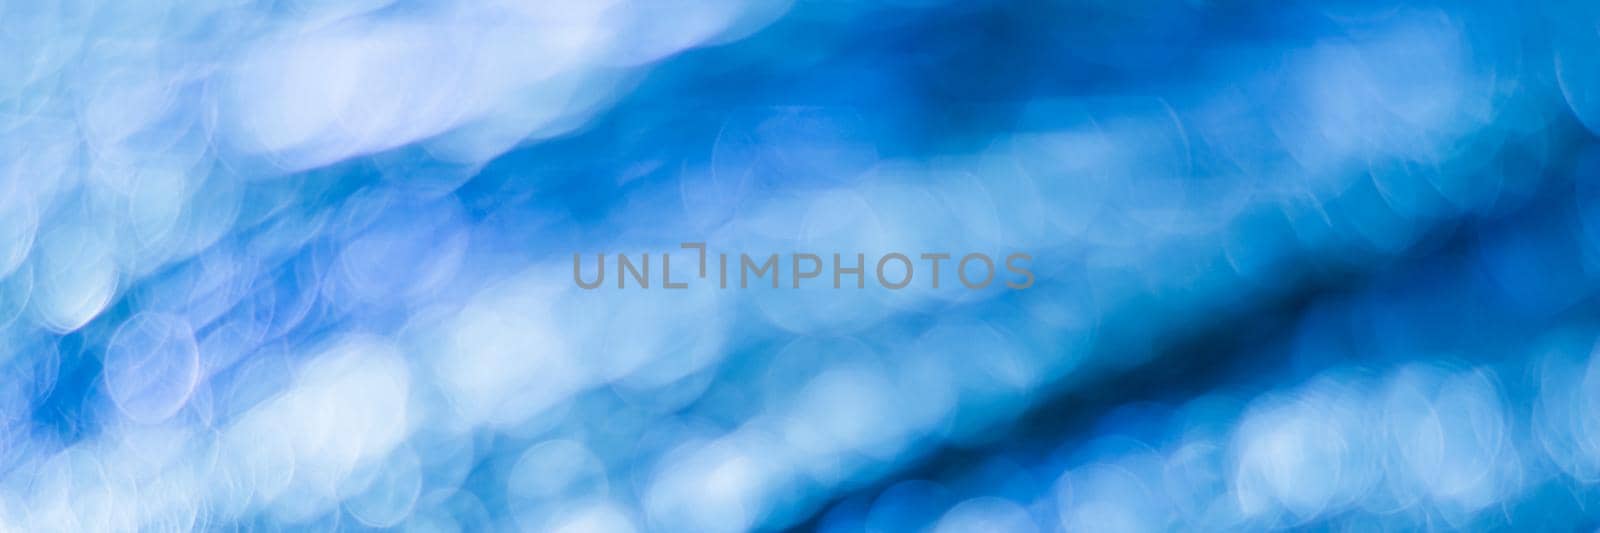 Blue abstract background with bokeh defocused lights by vikiriki